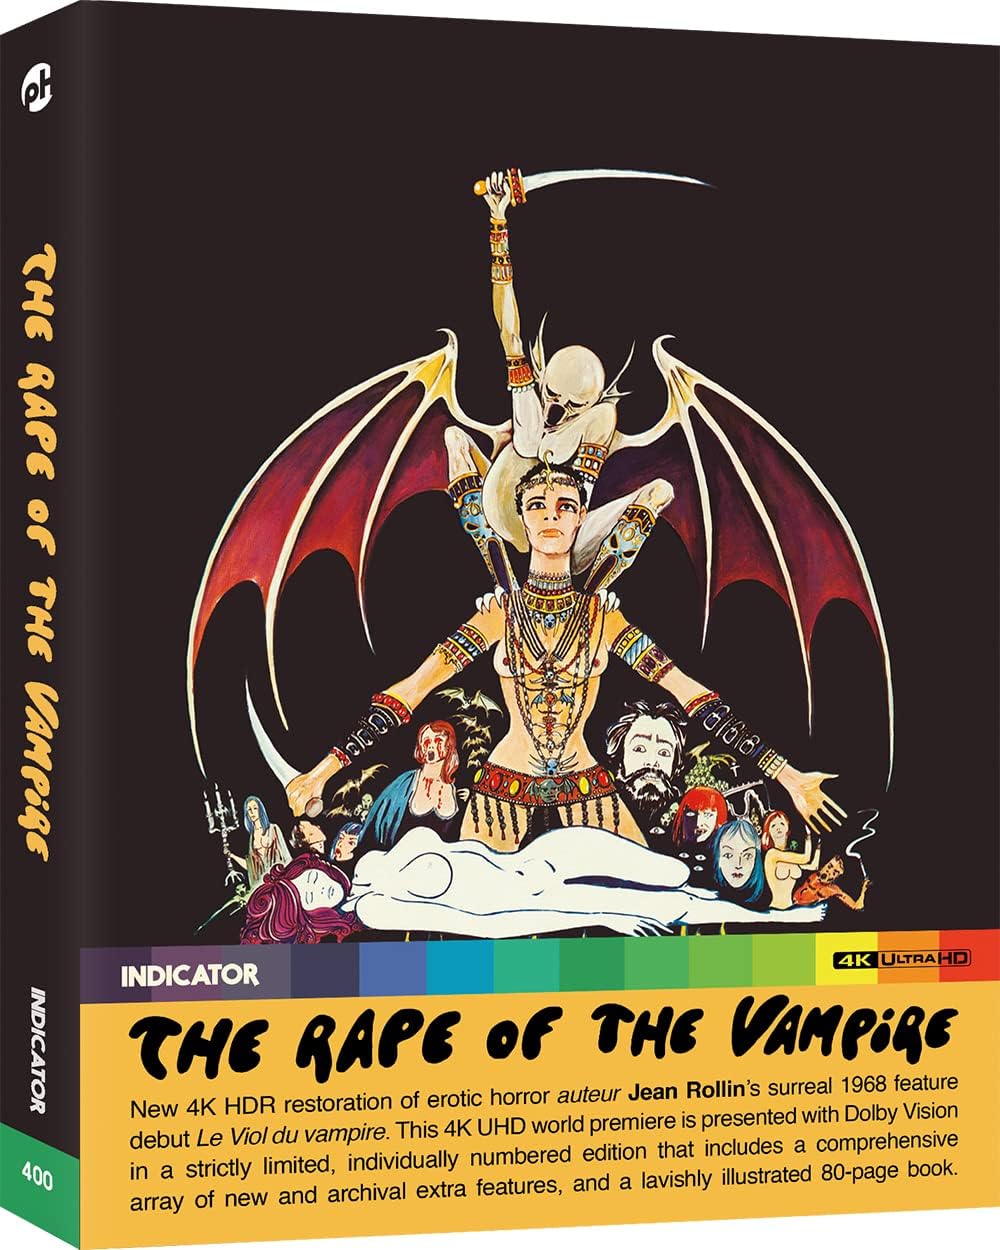 The Rape of the Vampire Limited Edition Indicator Powerhouse 4K UHD [NEW] [SLIPCOVER]